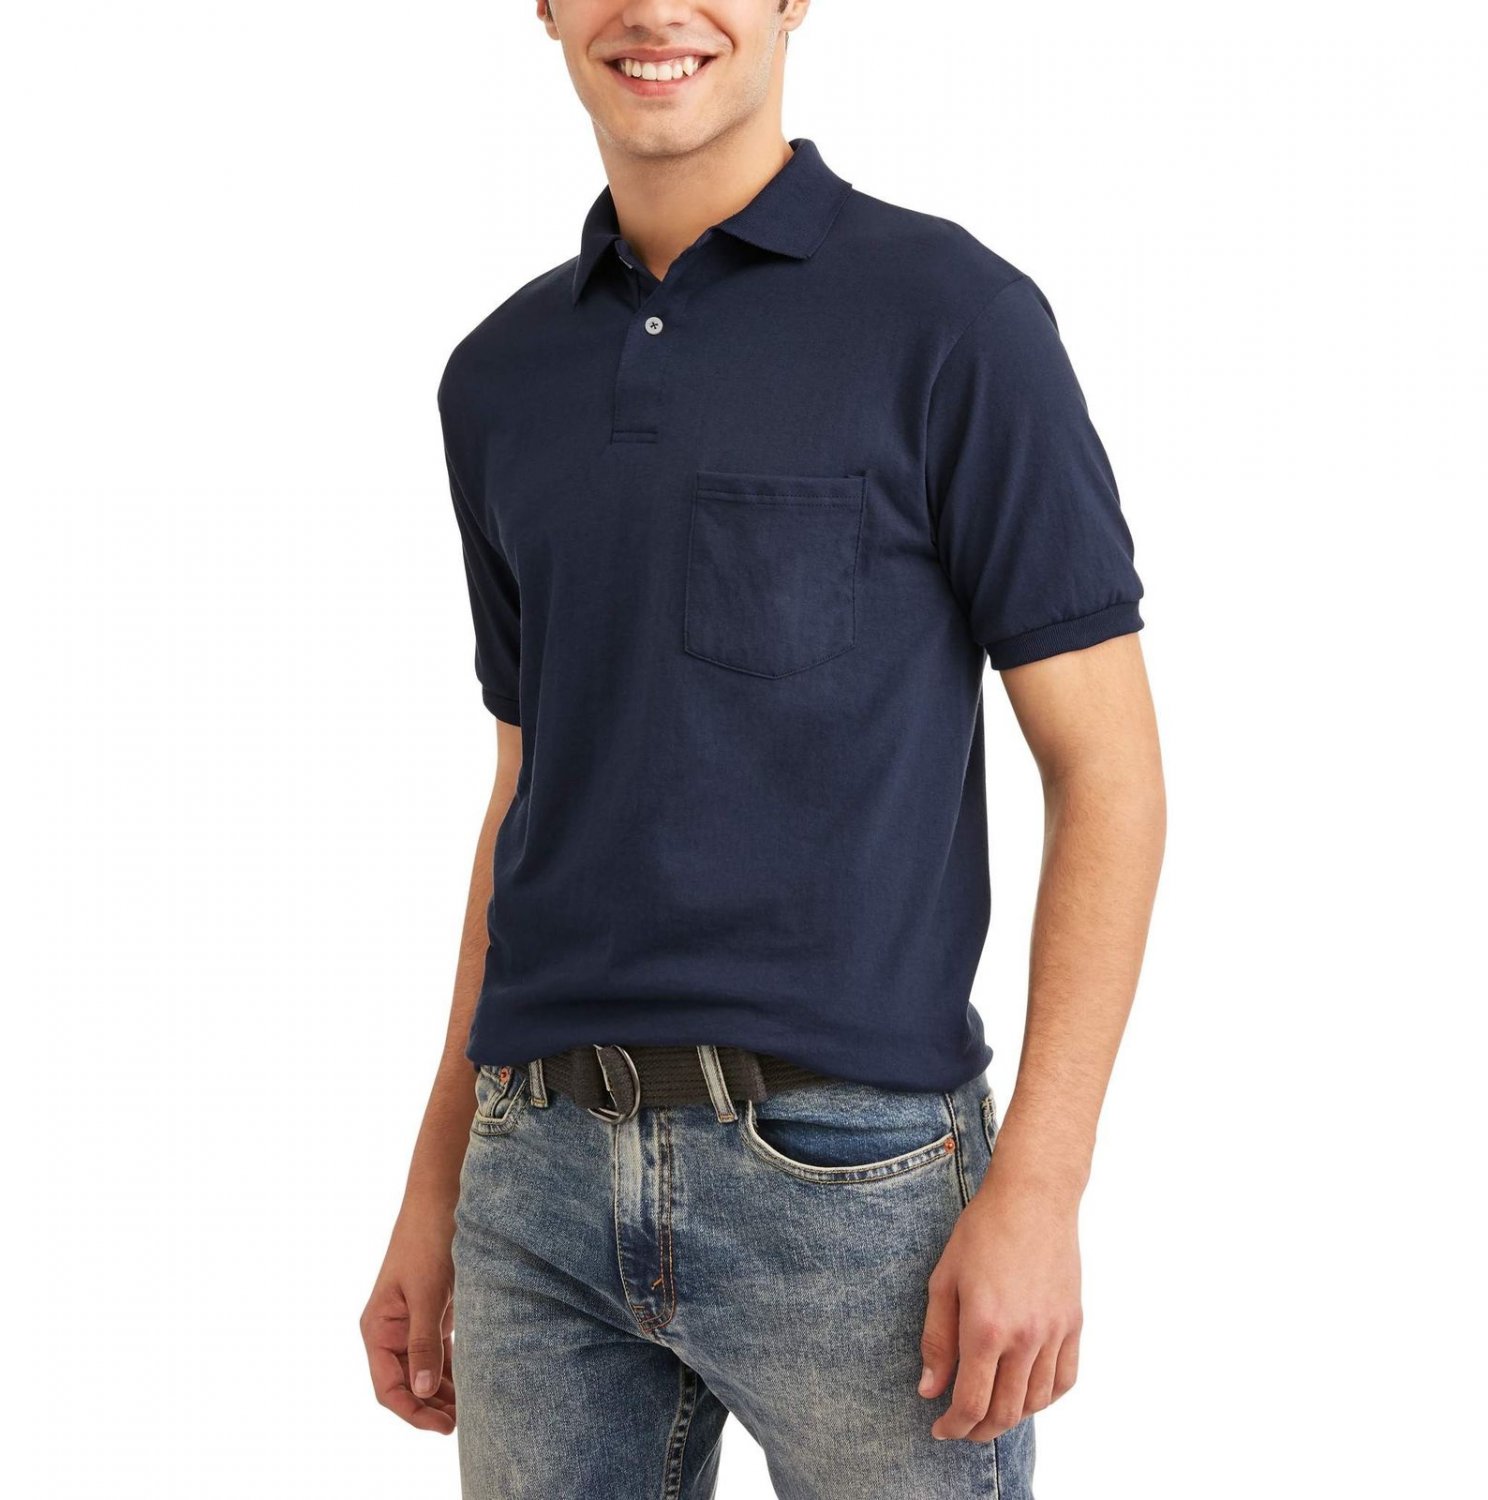 Hanes Men's Comfort Blend EcoSmart Jersey Polo with Pocket Blue S